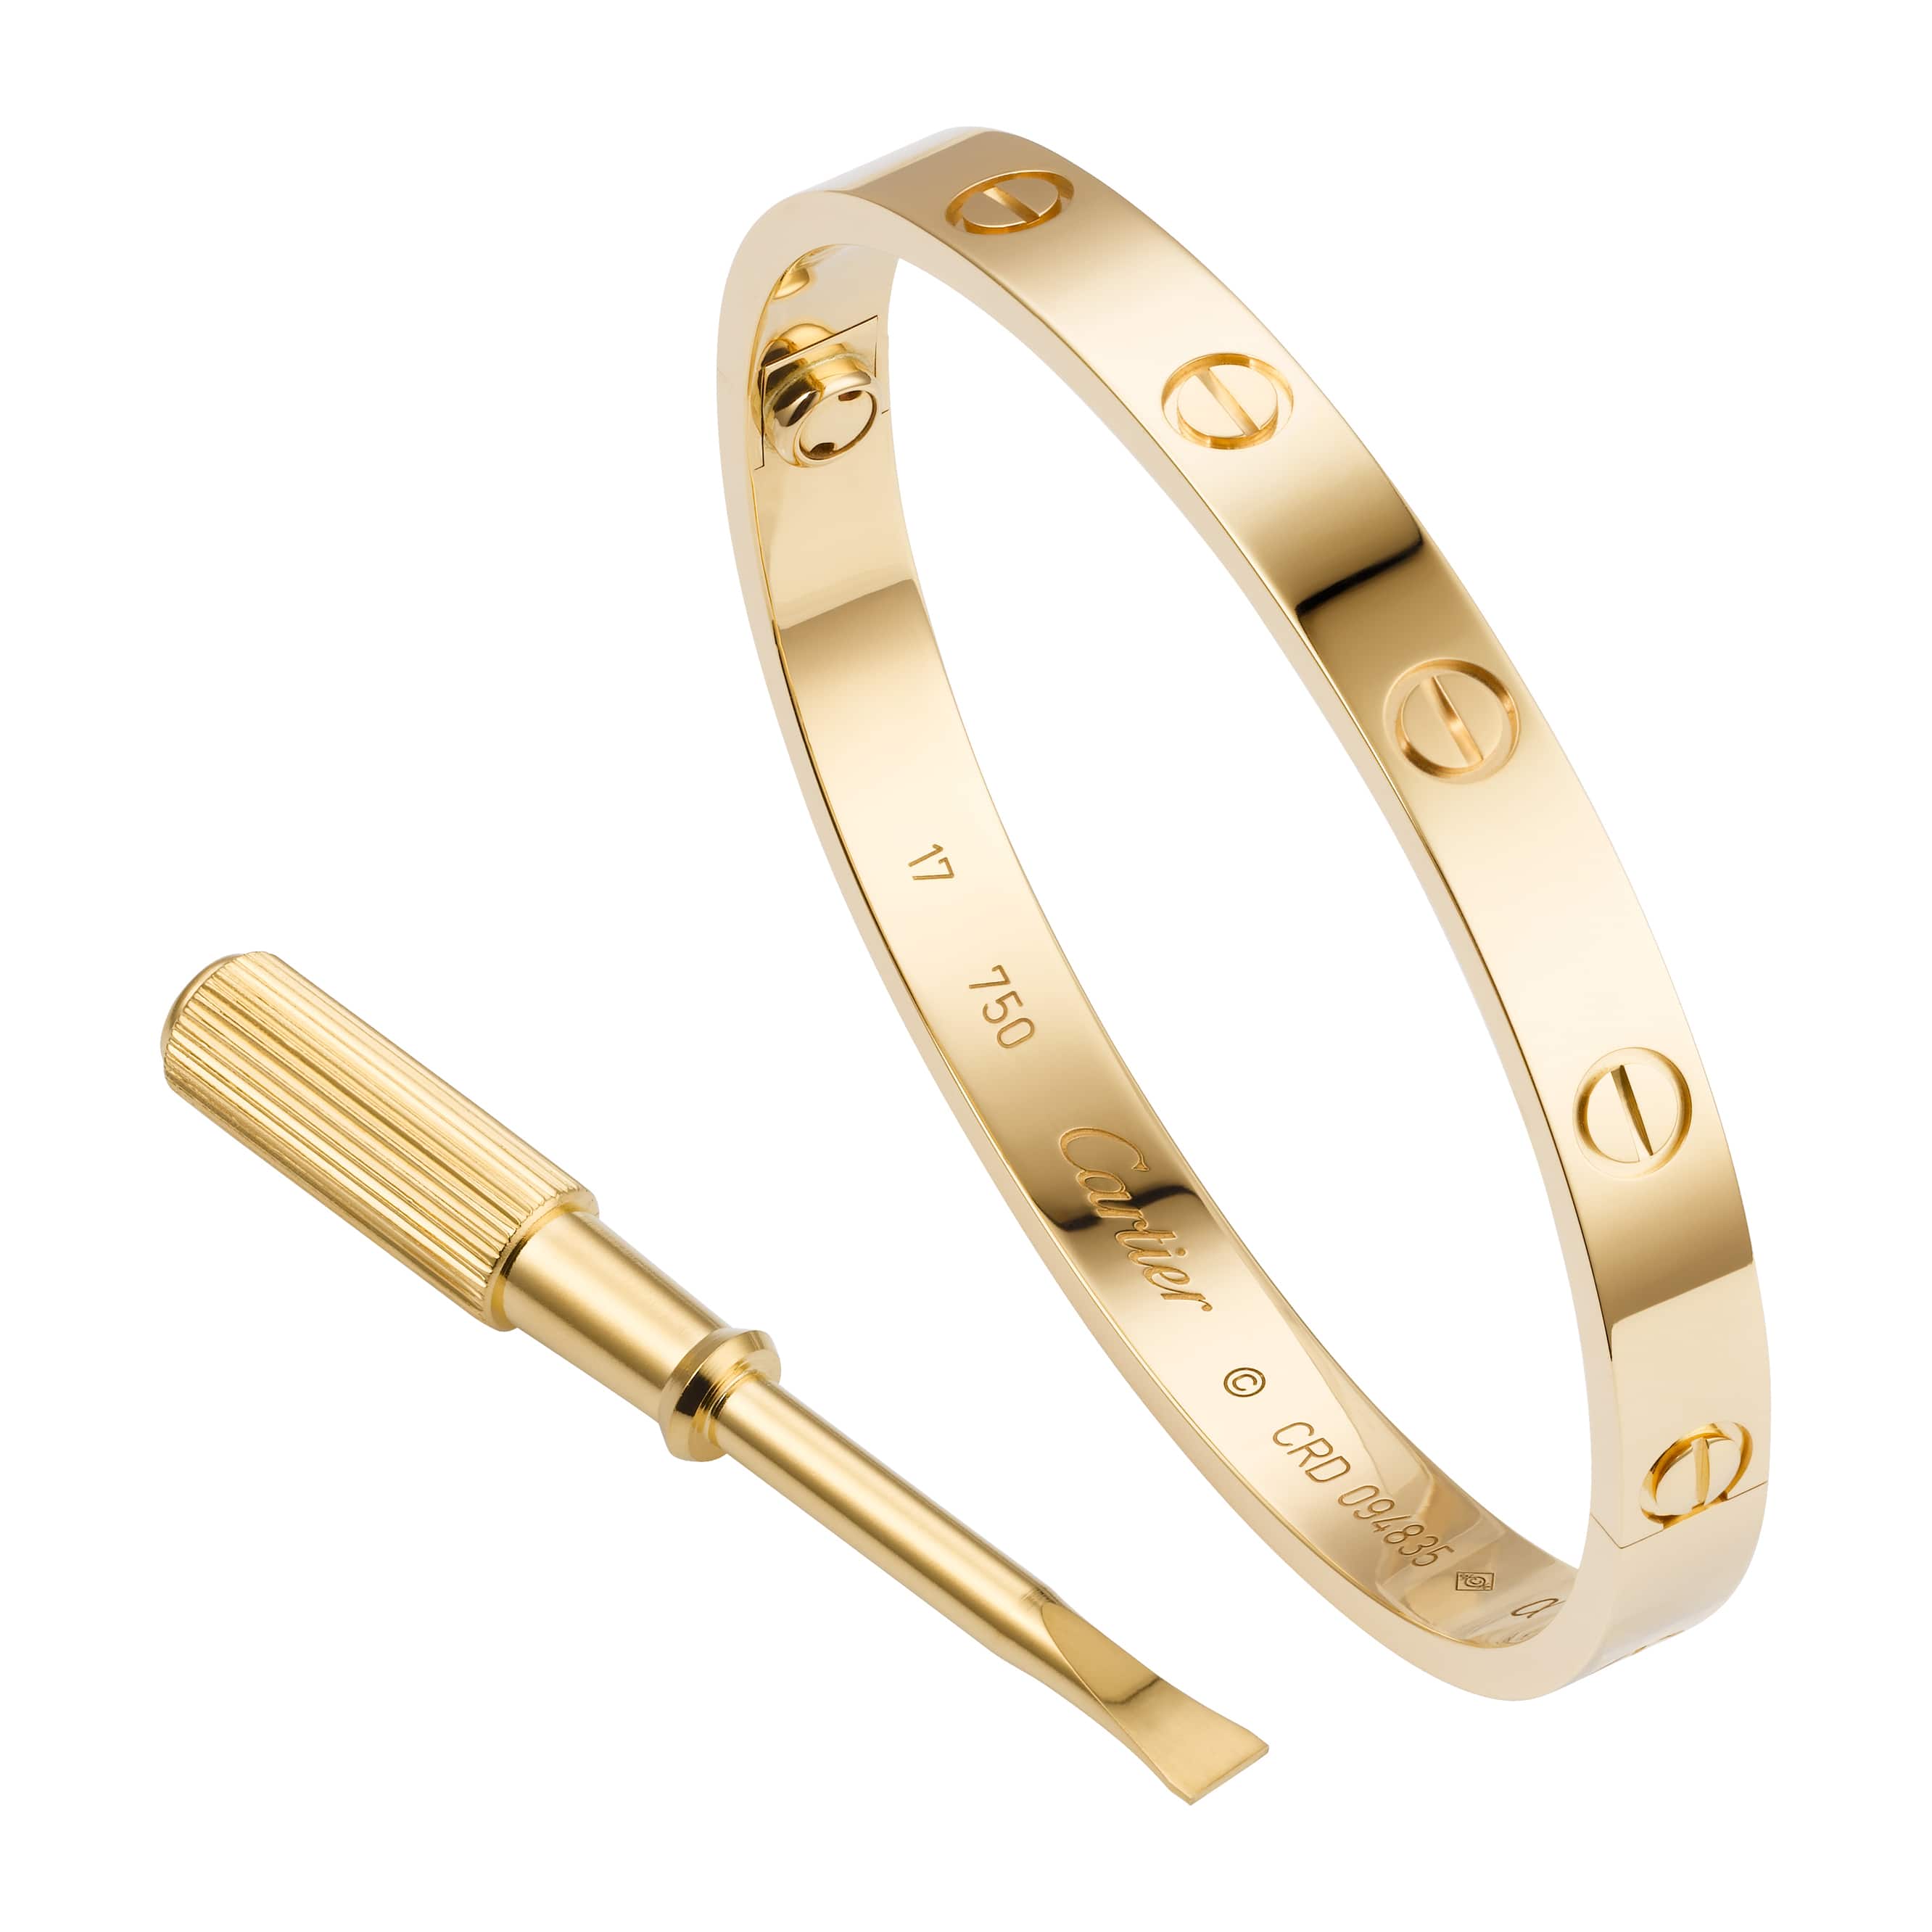 Details more than 74 iconic luxury bracelets latest - 3tdesign.edu.vn